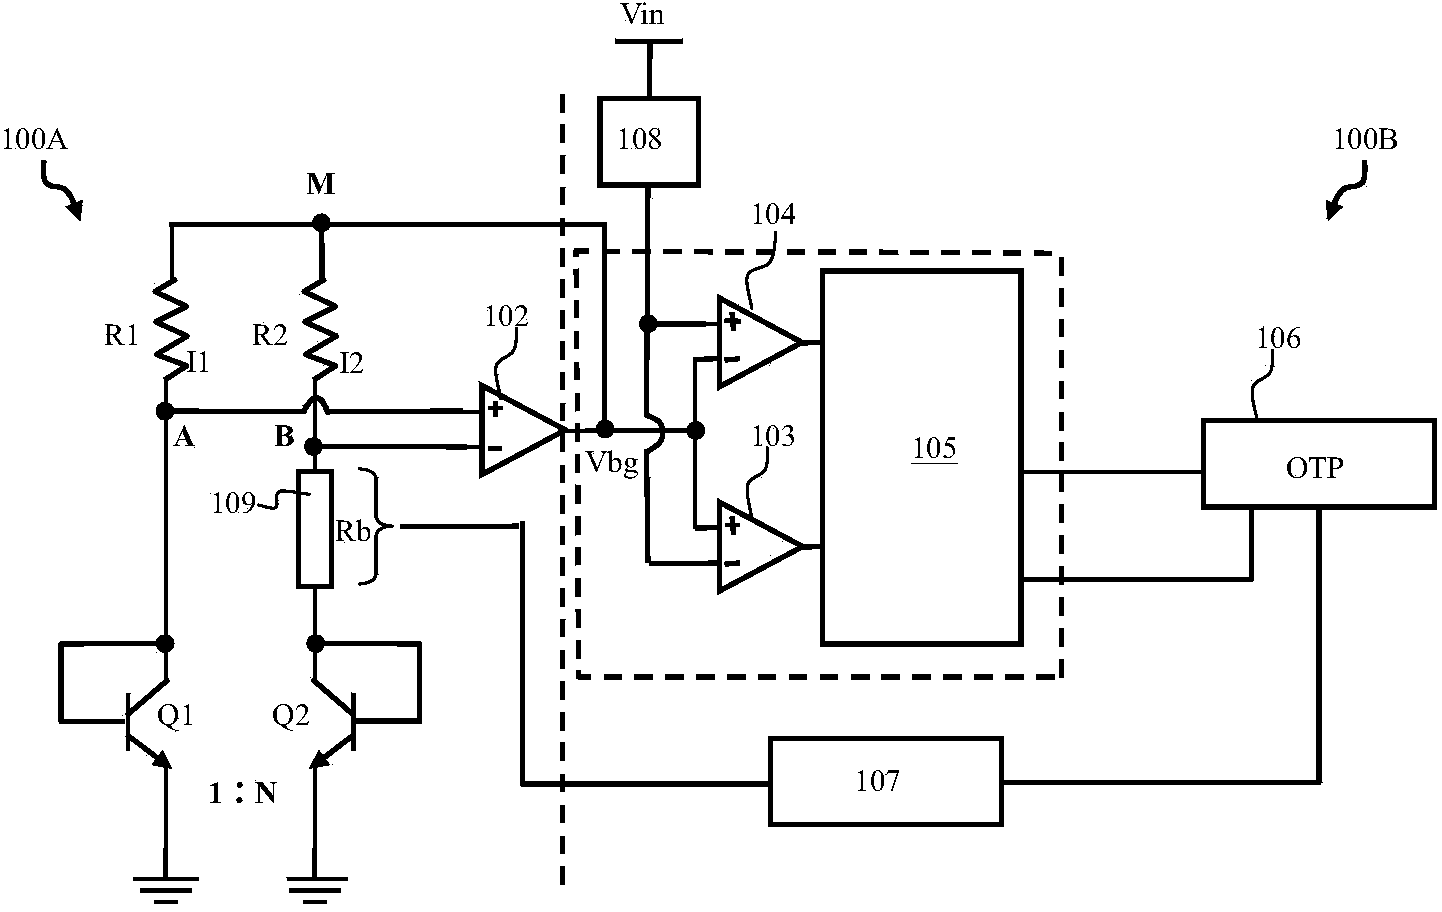 Band-gap reference source adjusting circuit